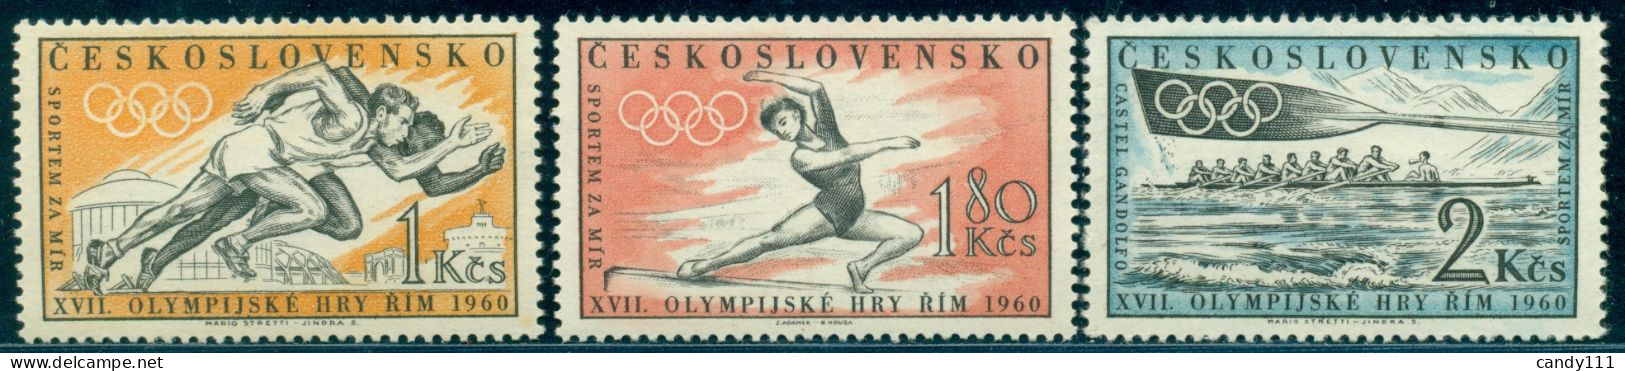 Czechoslovakia 1960 Rome Olympics,rowing,Gymnastics,running,Mi.1206,MNH - Verano 1960: Roma